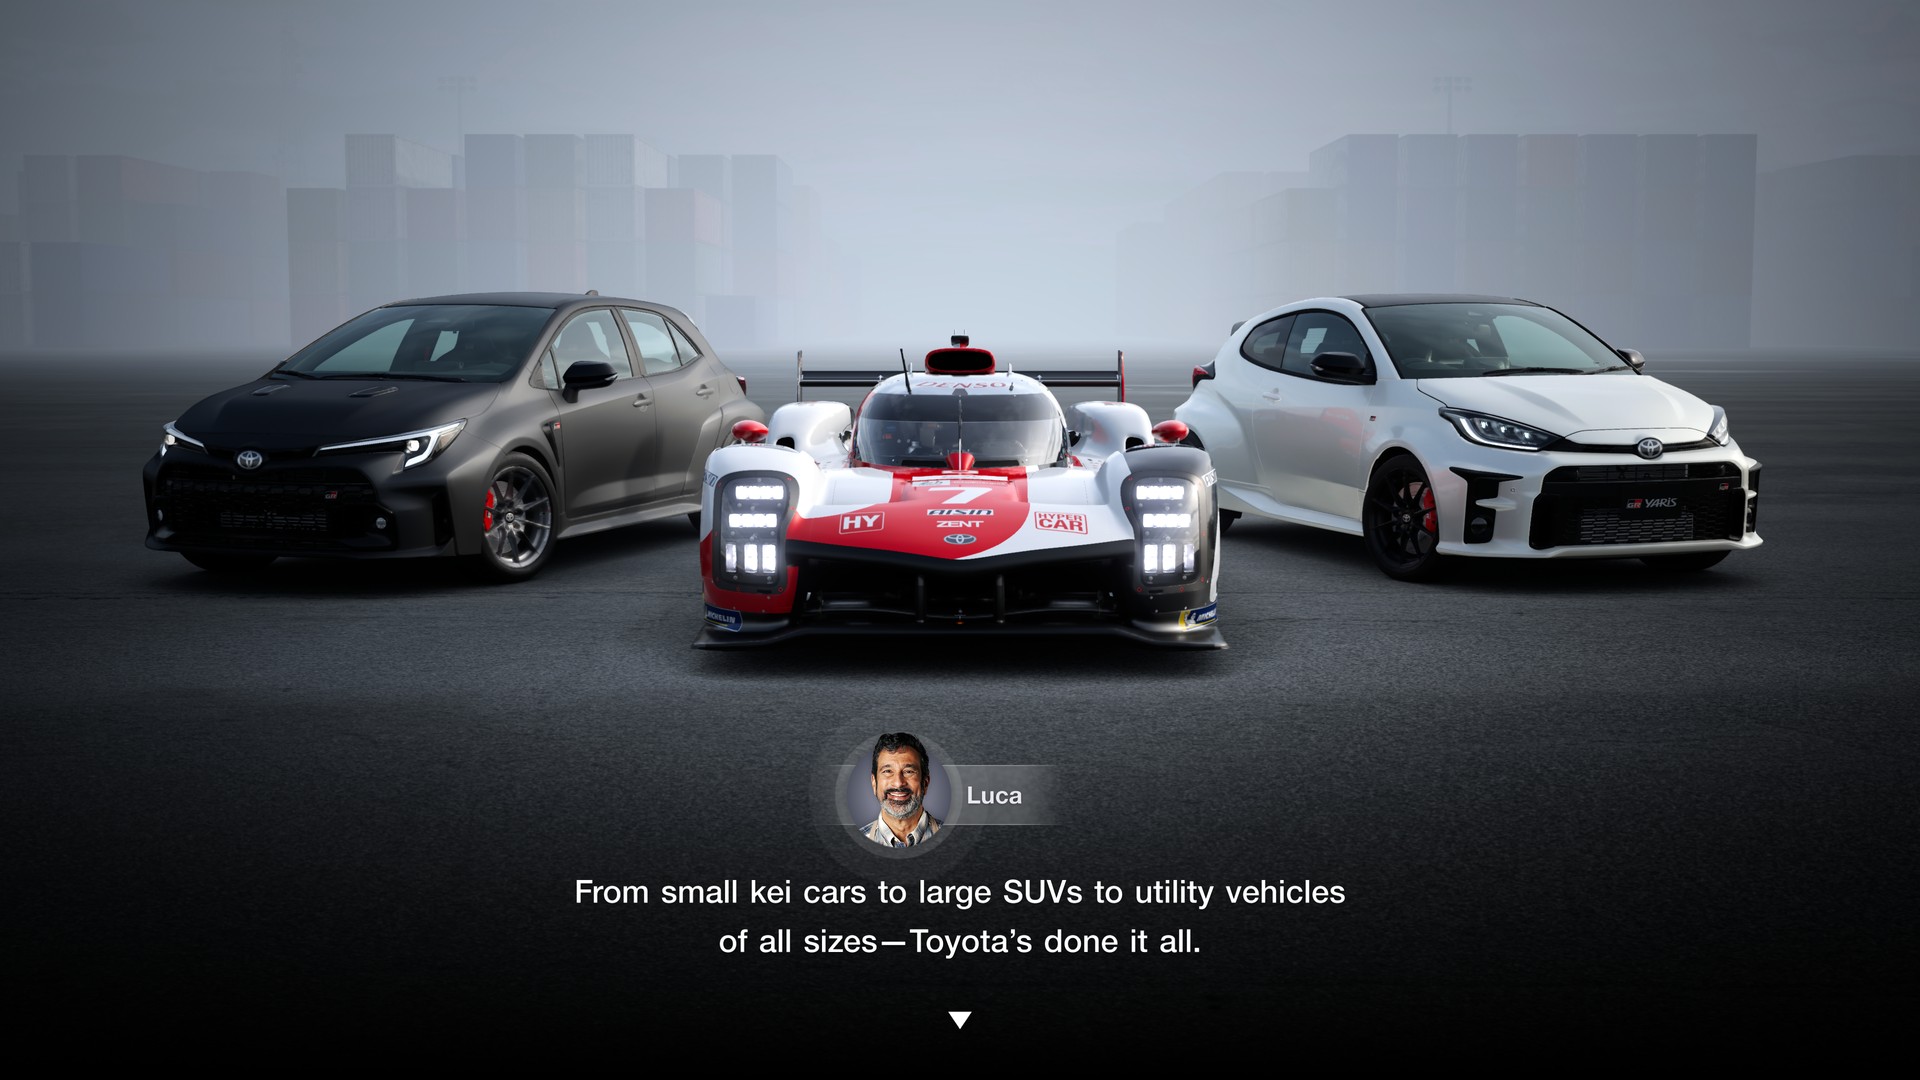 Gran Turismo 7 July Update Adds Three Free Cars, Including Porsche 918  Spyder